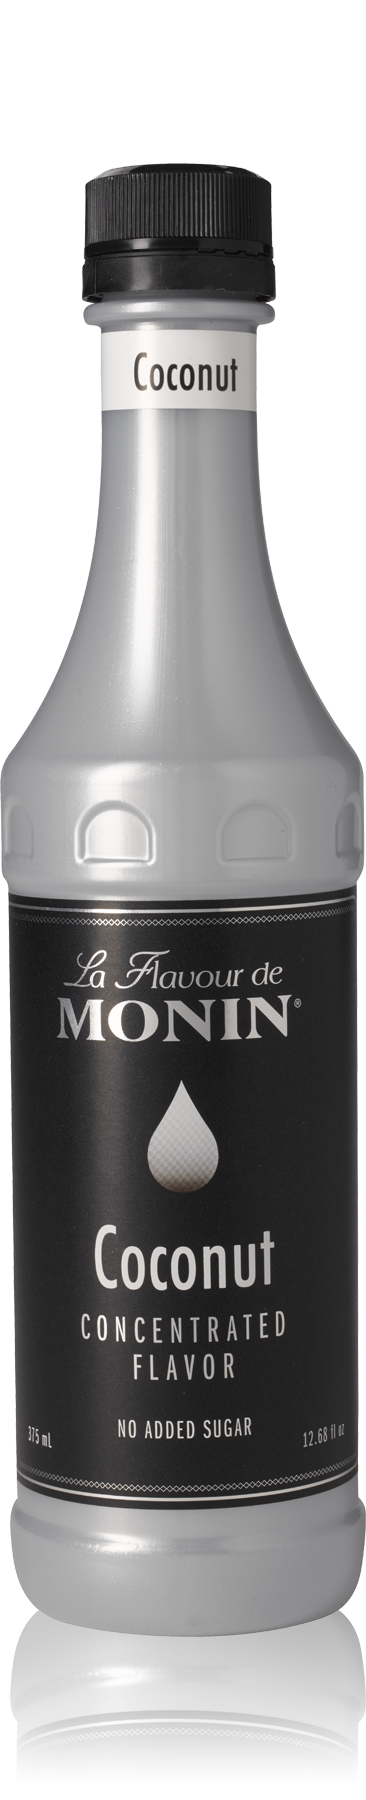 Monin Coconut Concentrated Flavor 375mL Bottle